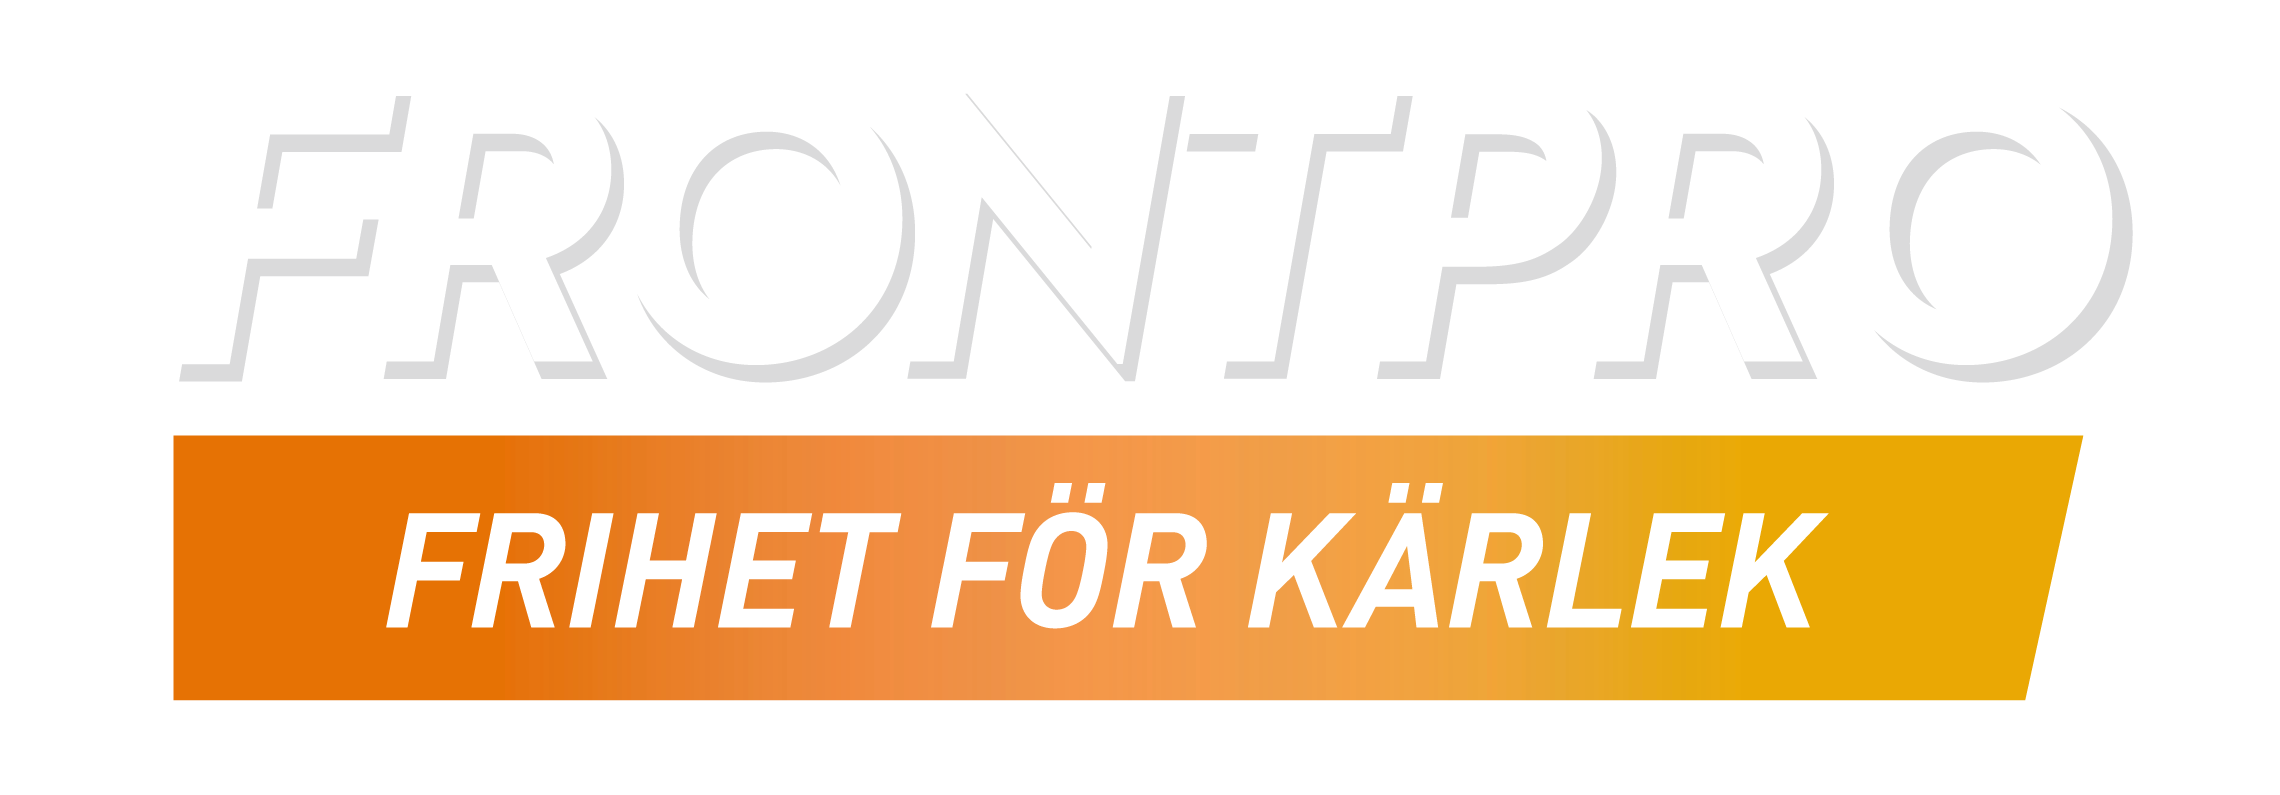 Frontpro logo.